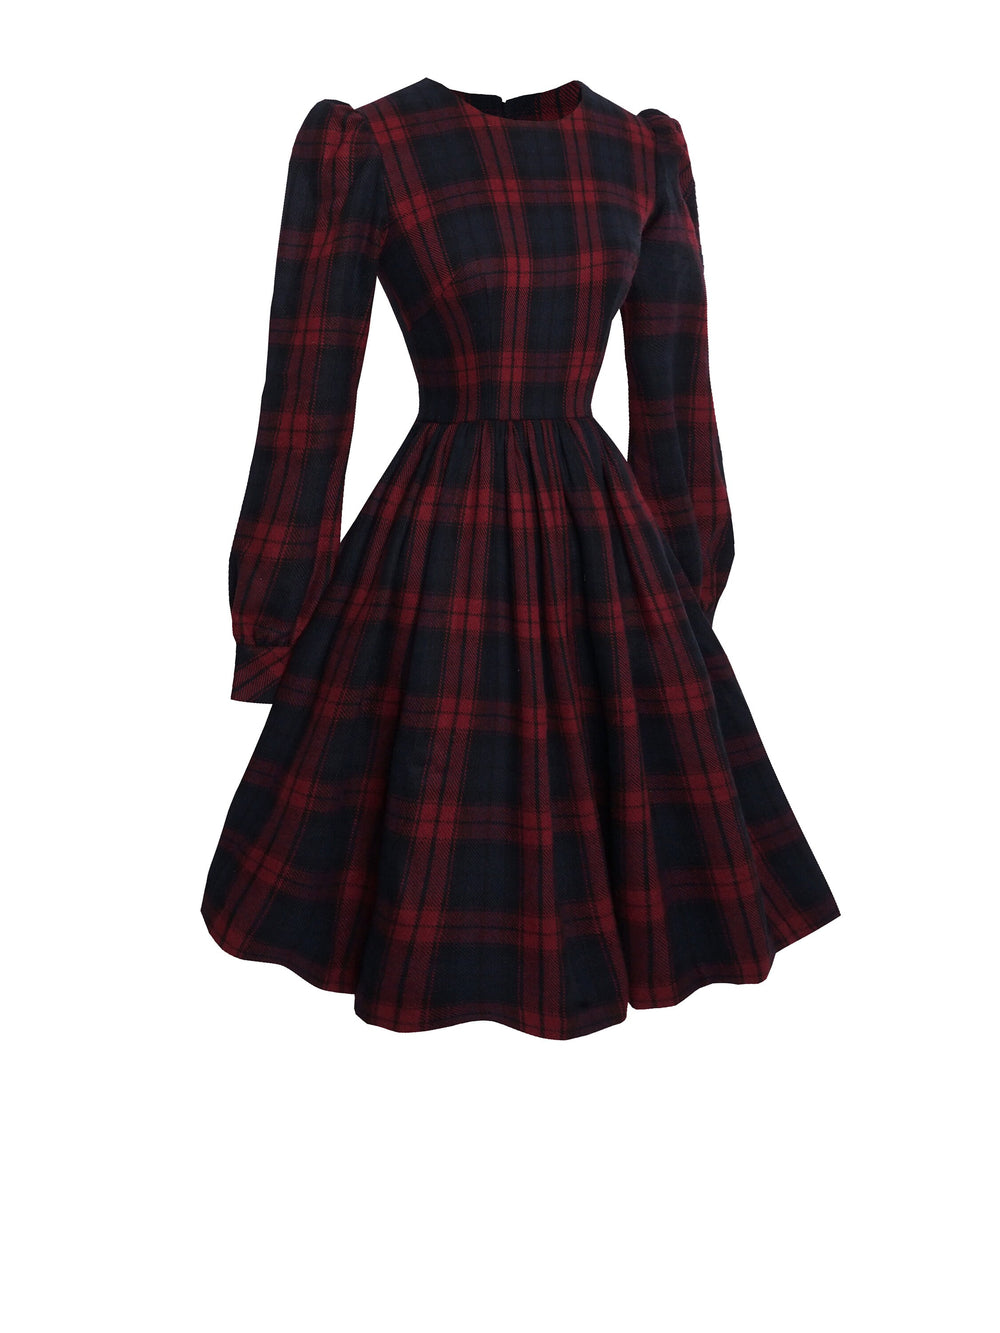 RTS - Size XS - Agnes Dress "Cambridge Plaid" Dark Red Tweed